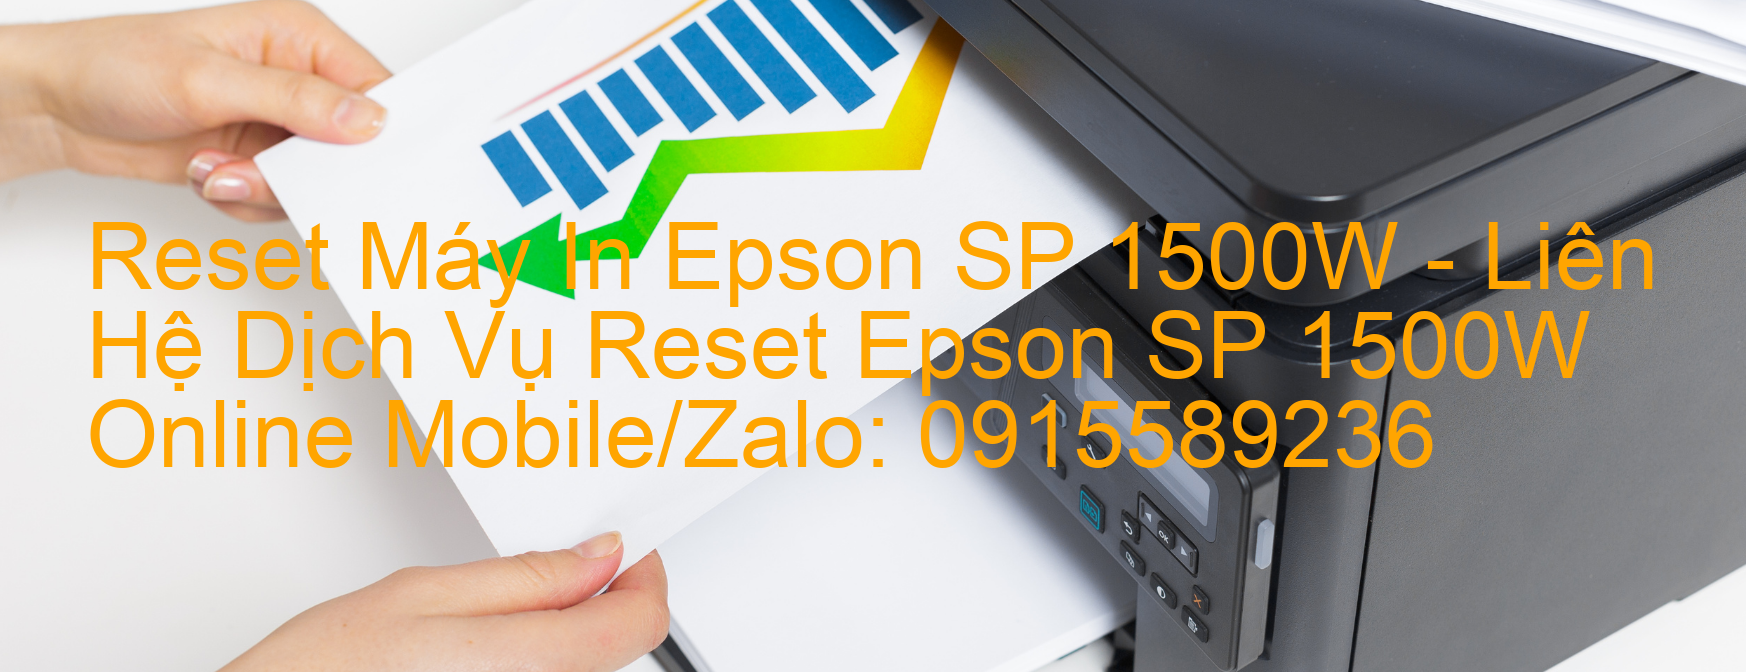 Reset Máy In Epson SP 1500W Online